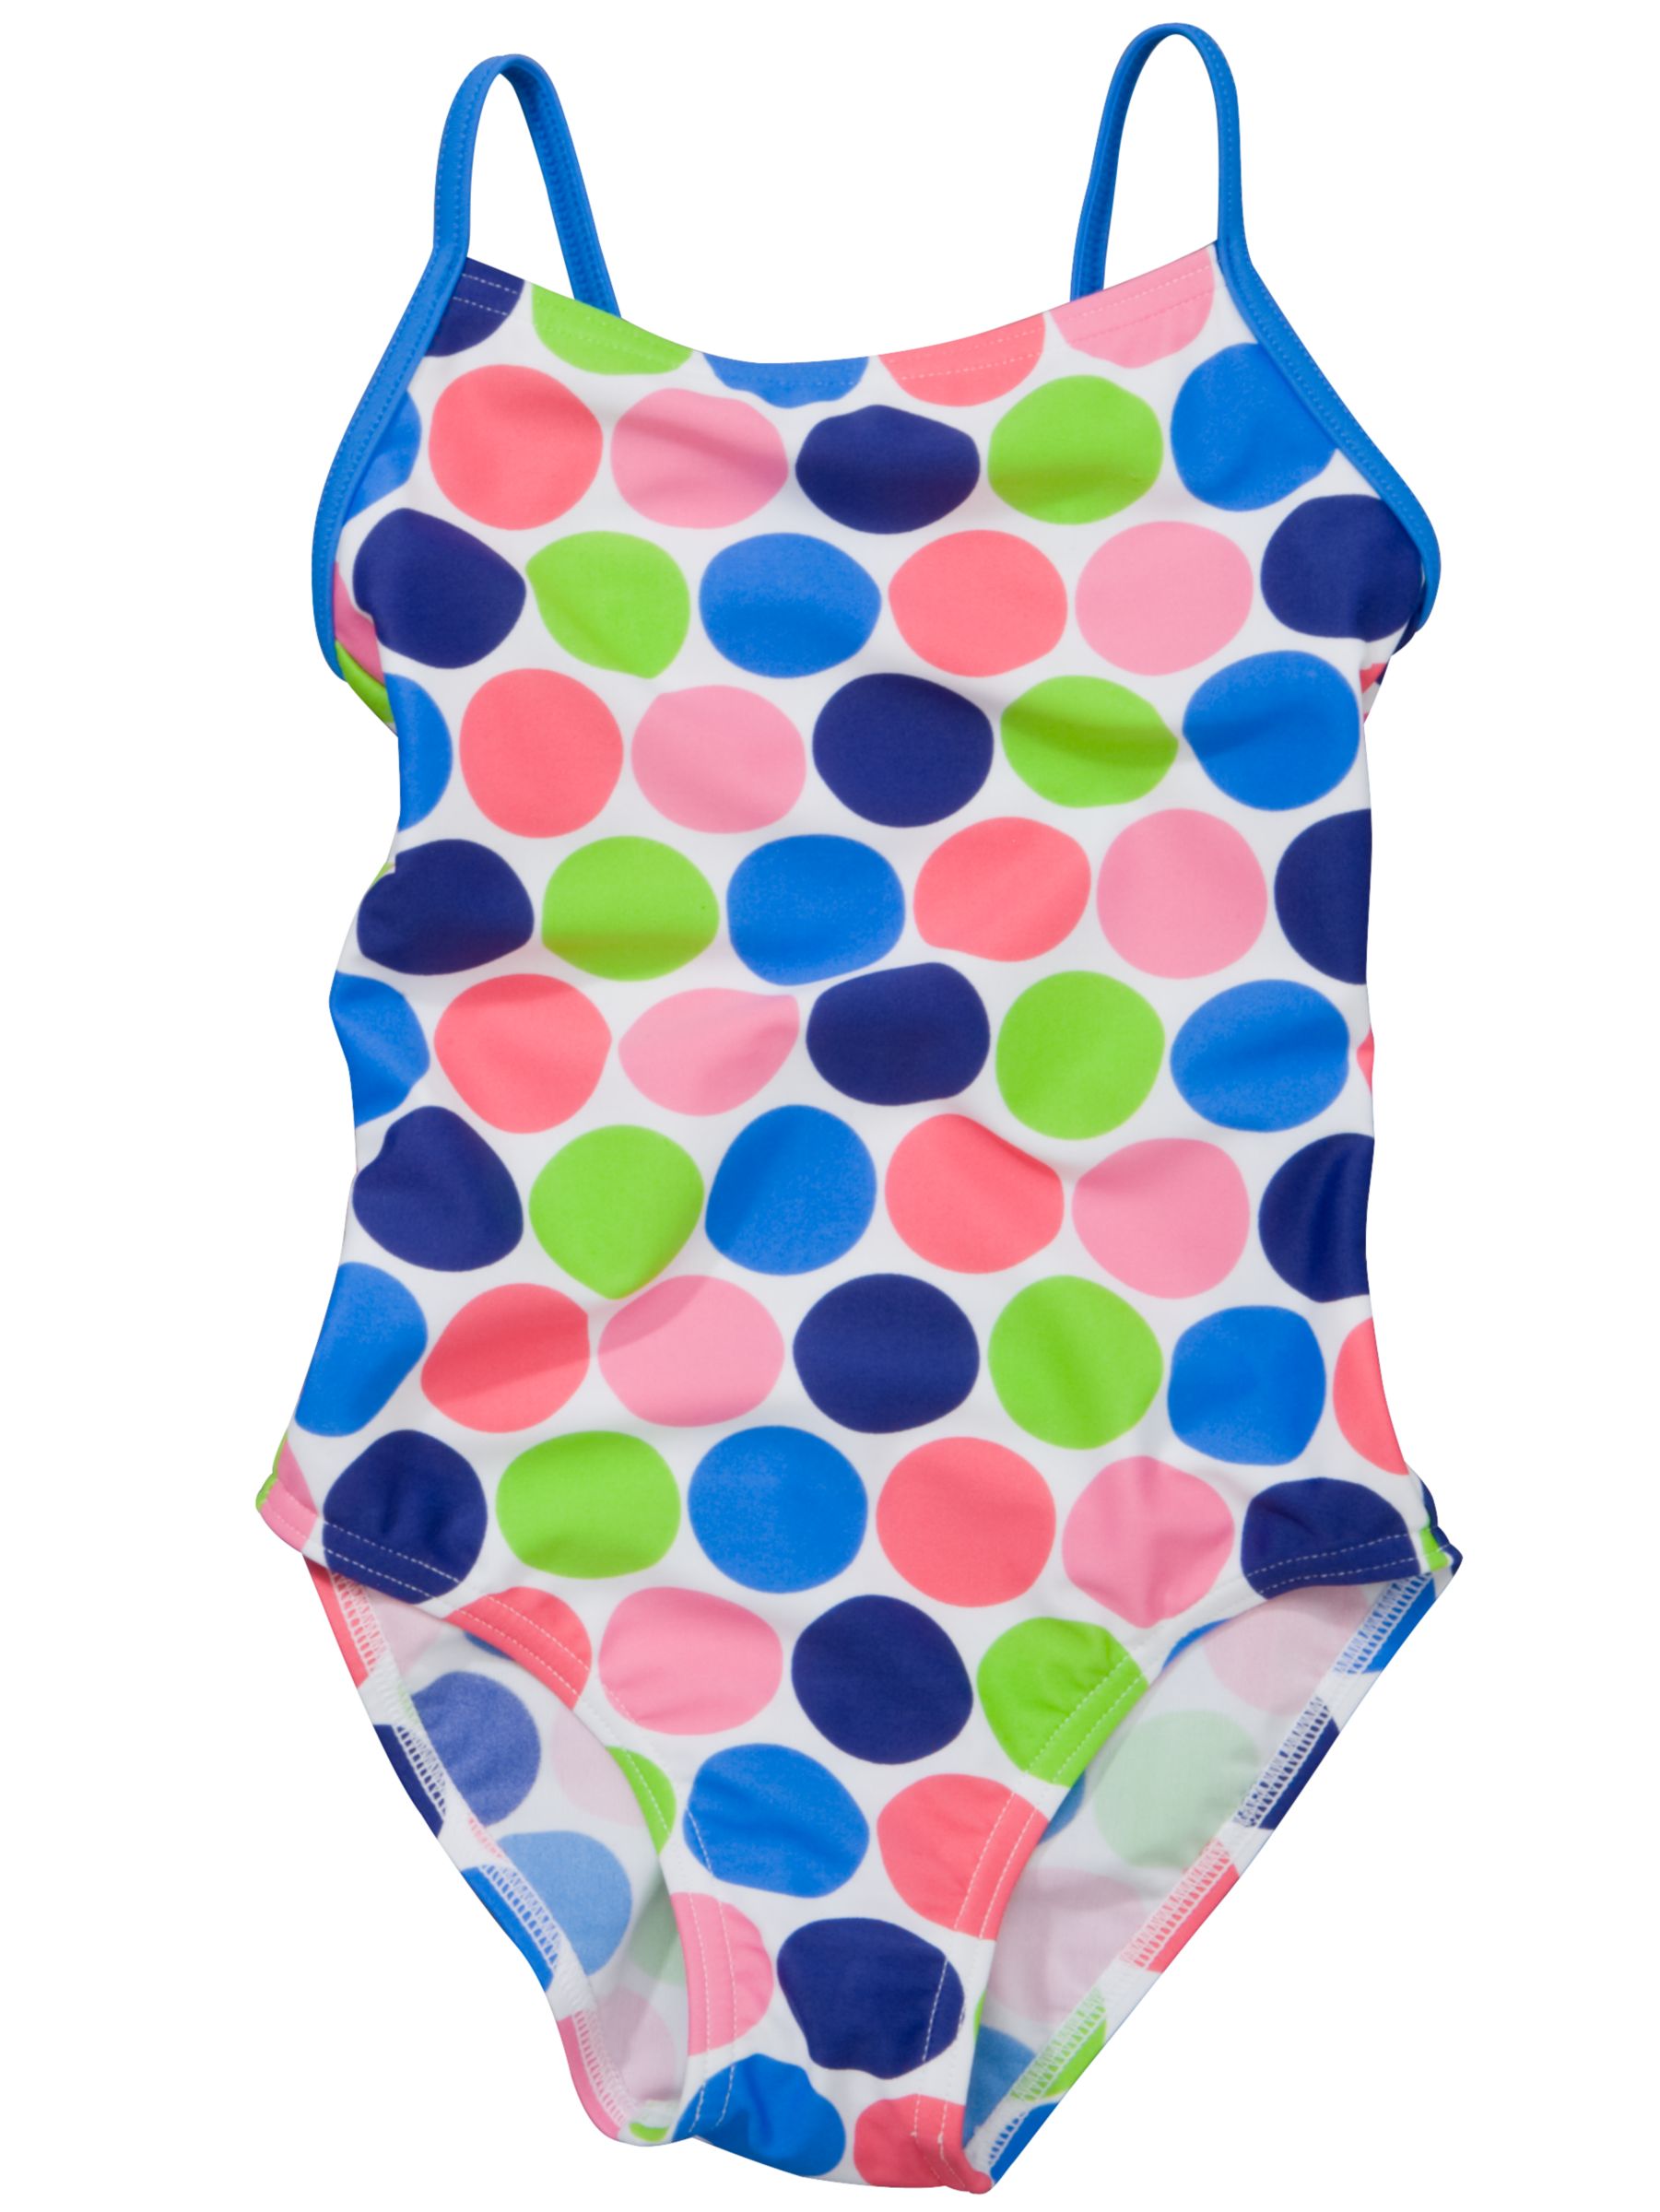 John Lewis Spot Swimsuit, Multicoloured, 5-6 Years